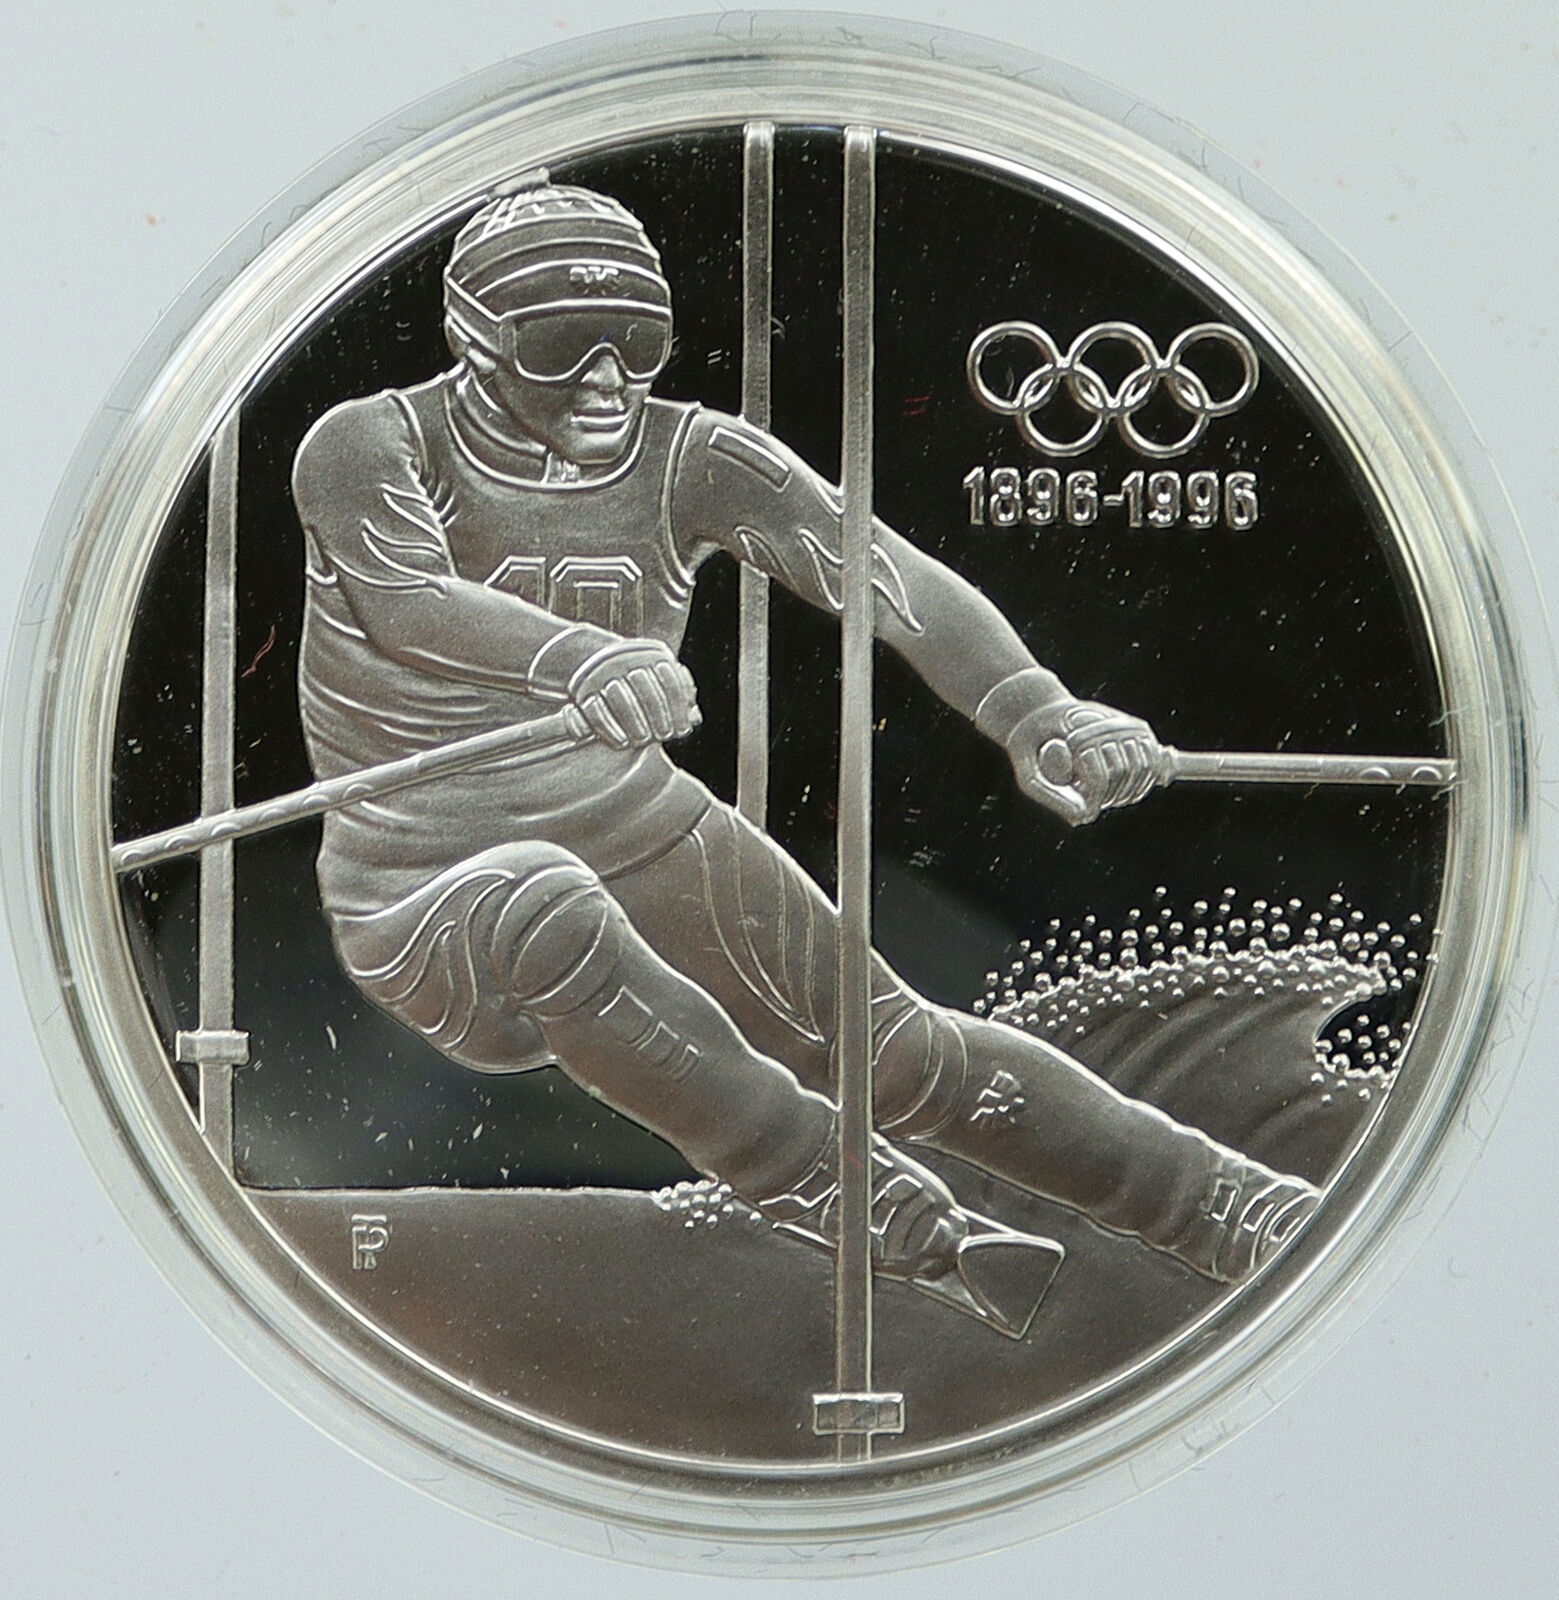 1995 AUSTRIA Centennial OLYMPICS SLALOM SKIING Proof Silver 200 Sch Coin i116026